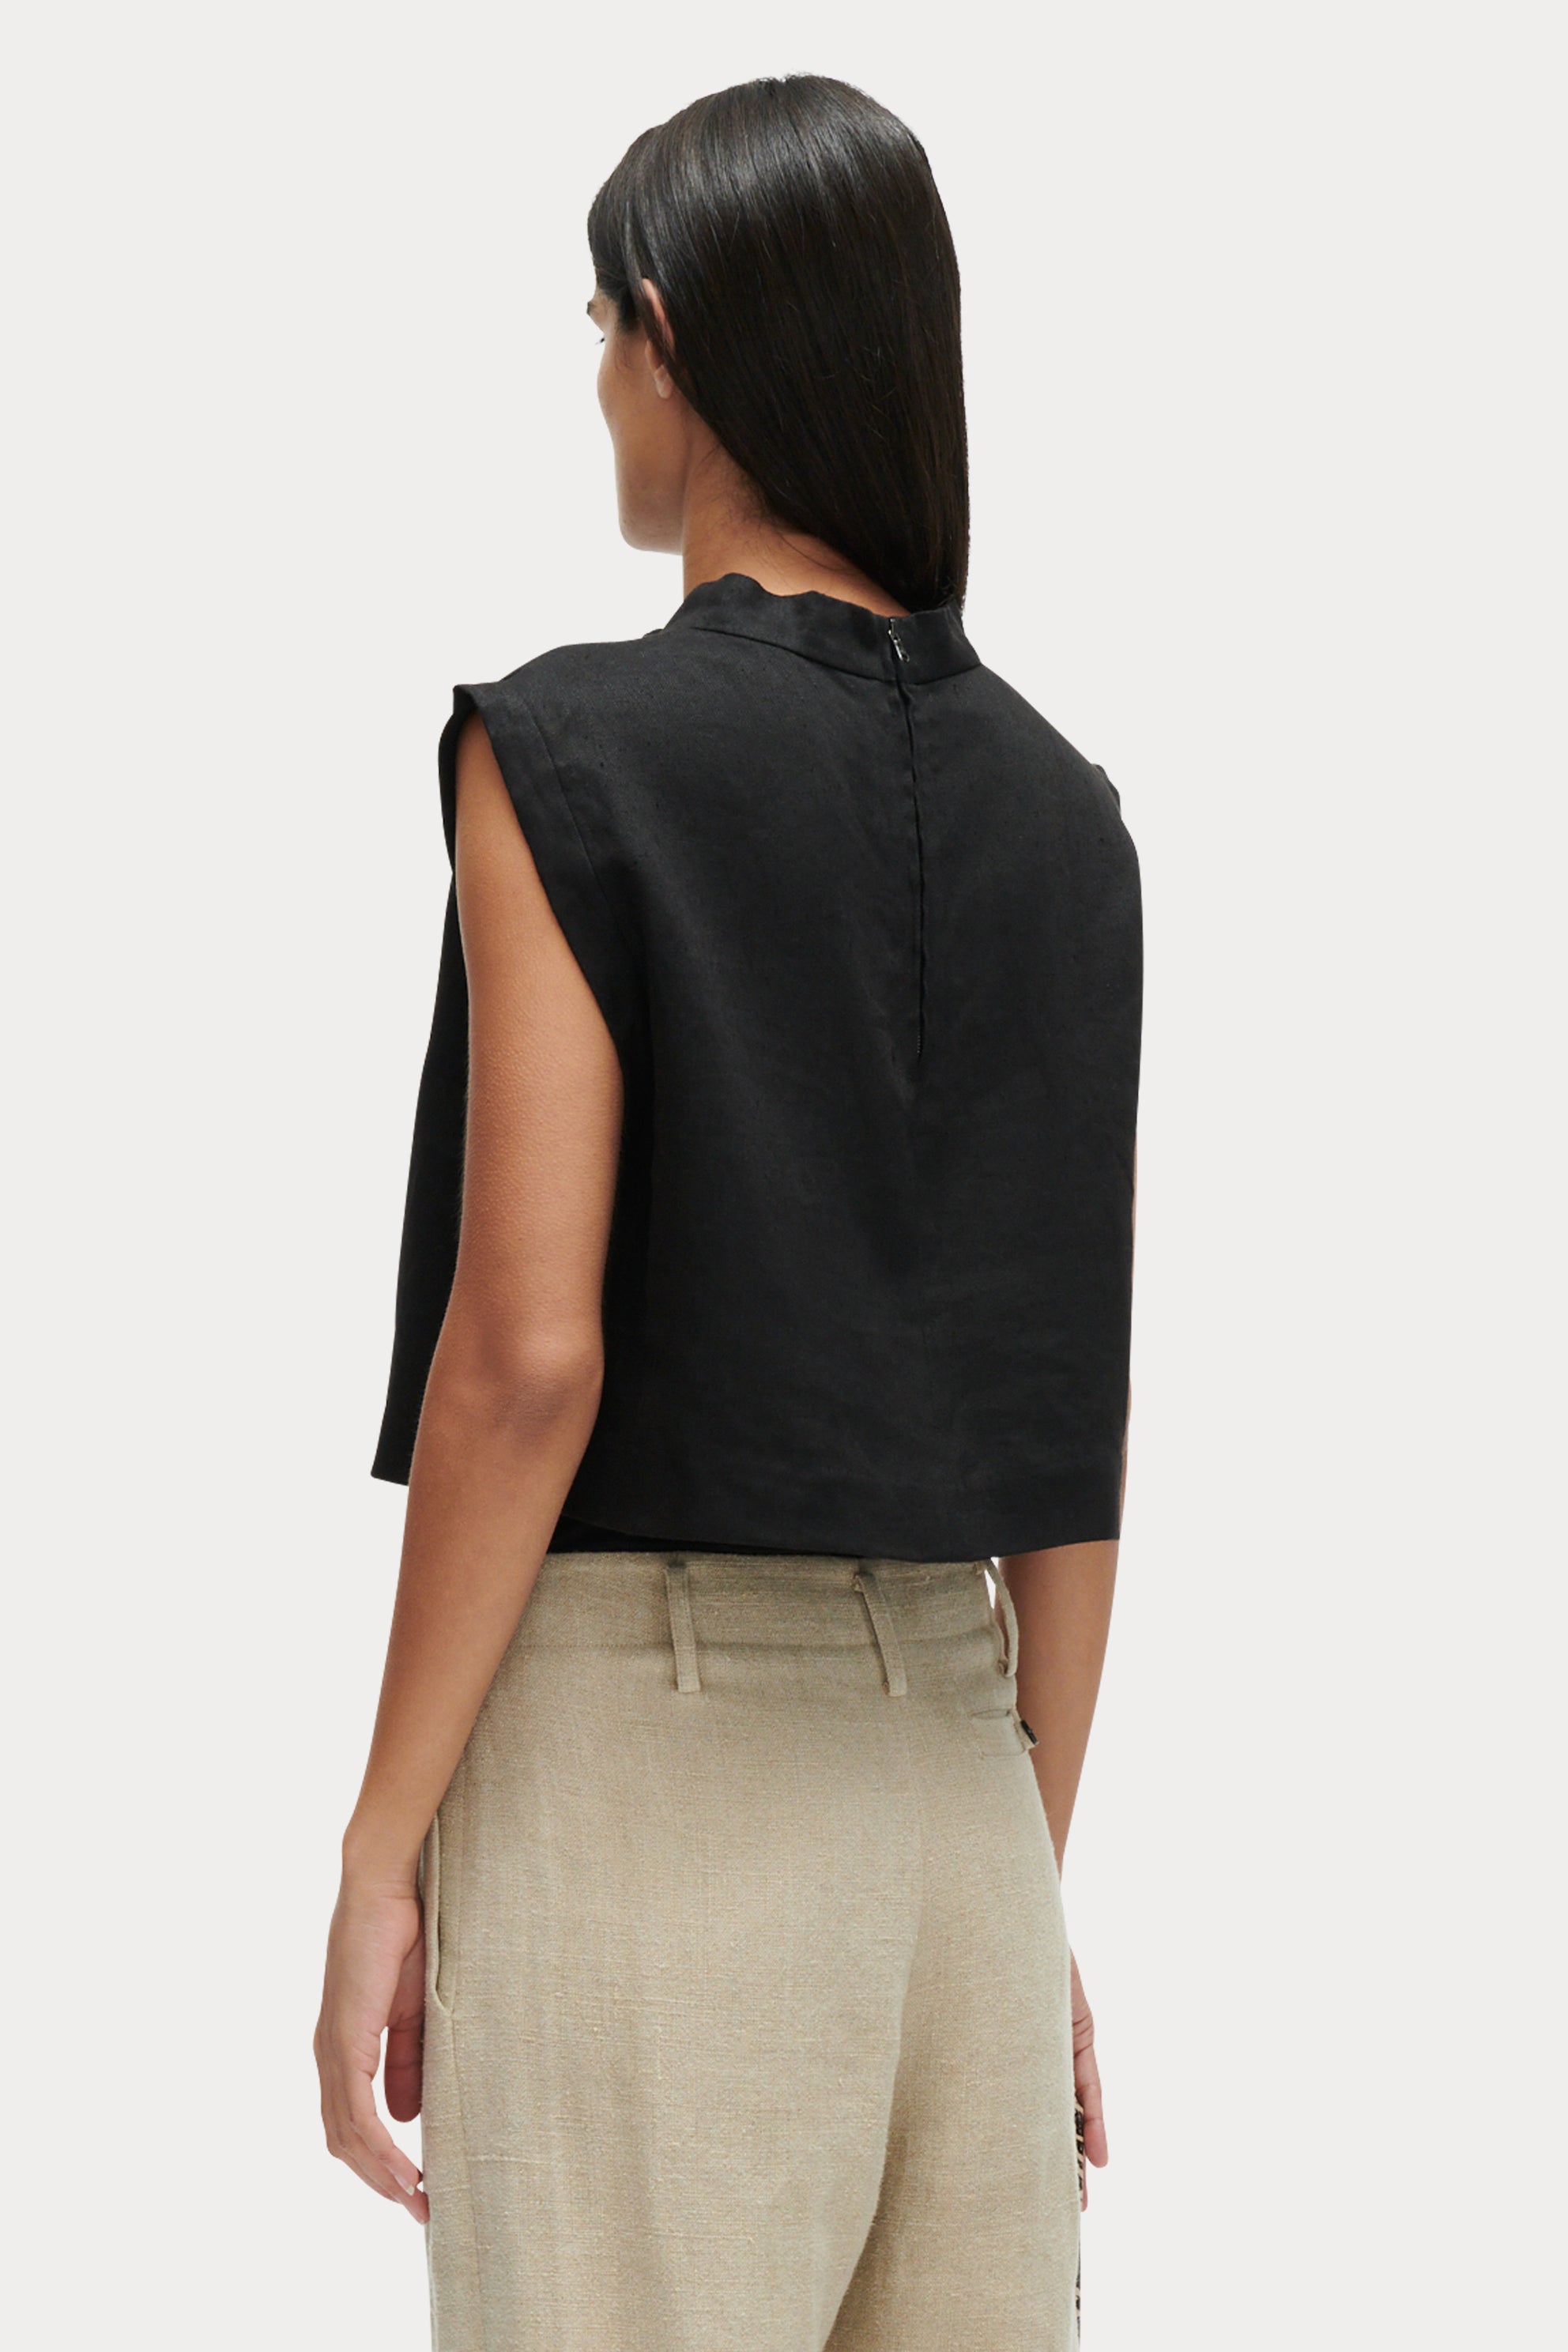 Buy Black Sleeveless Textured Top from Next Austria